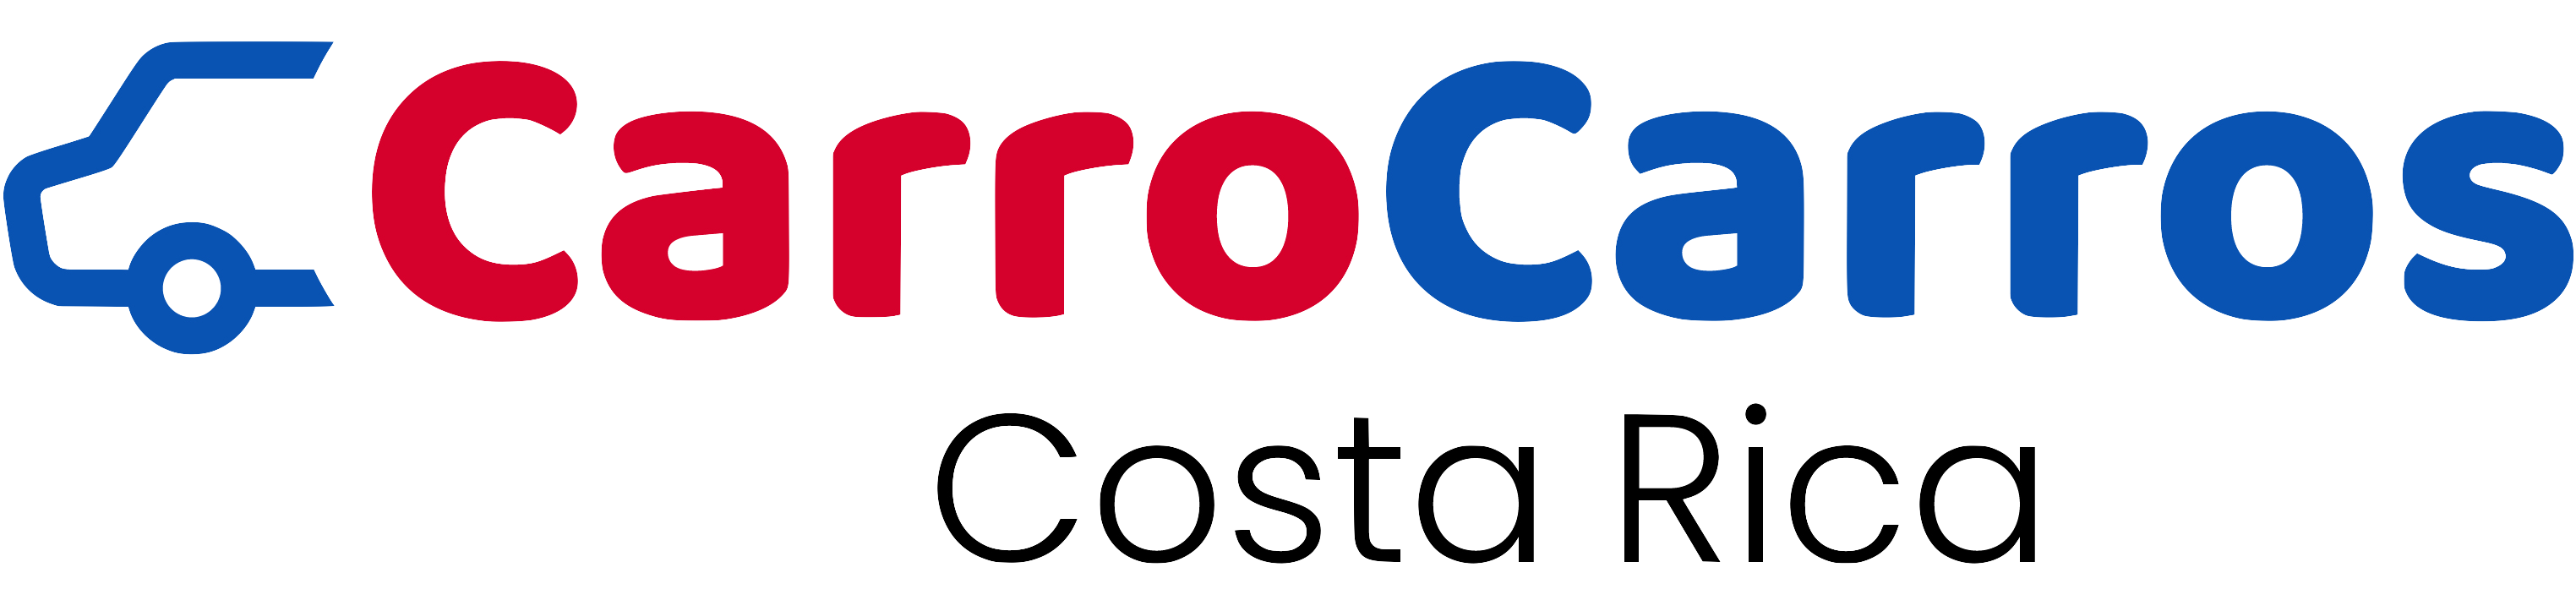 Costarica logo